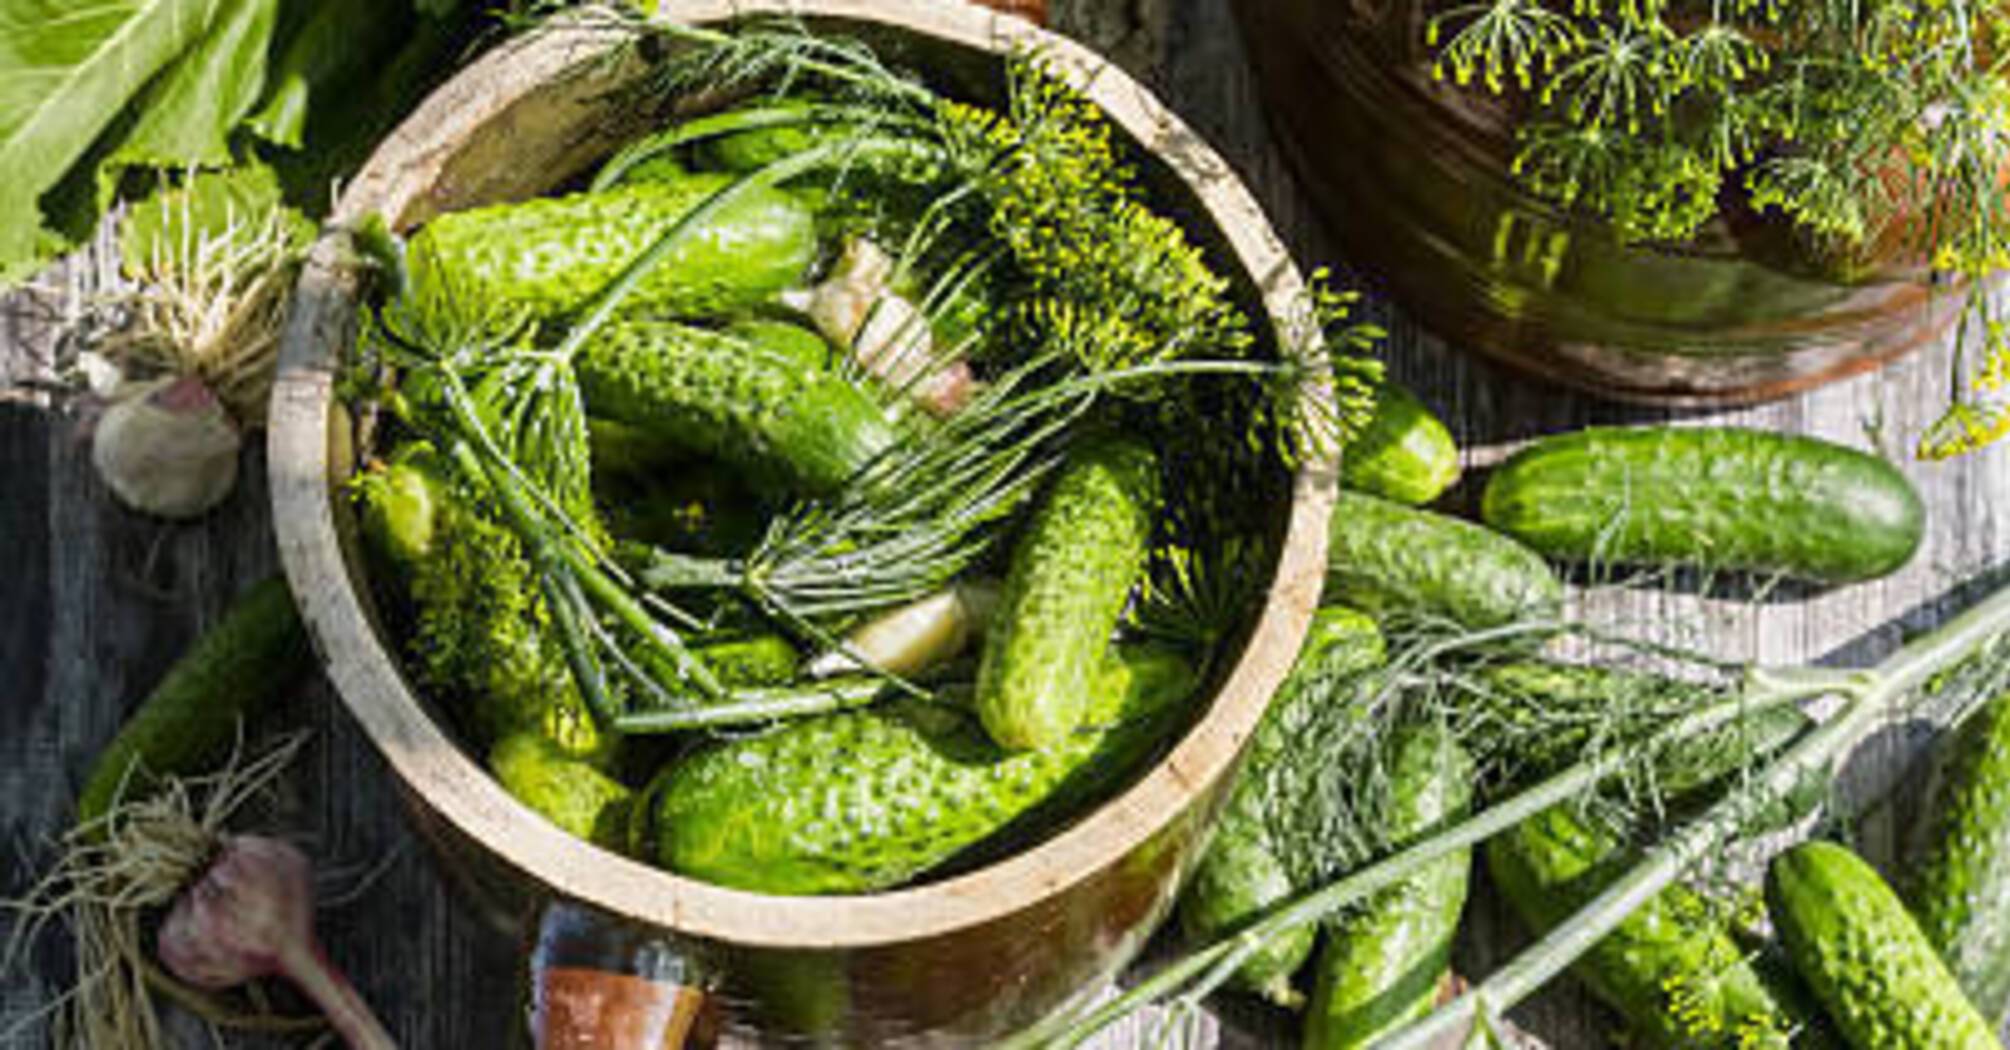 Recipe for pickled cucumbers